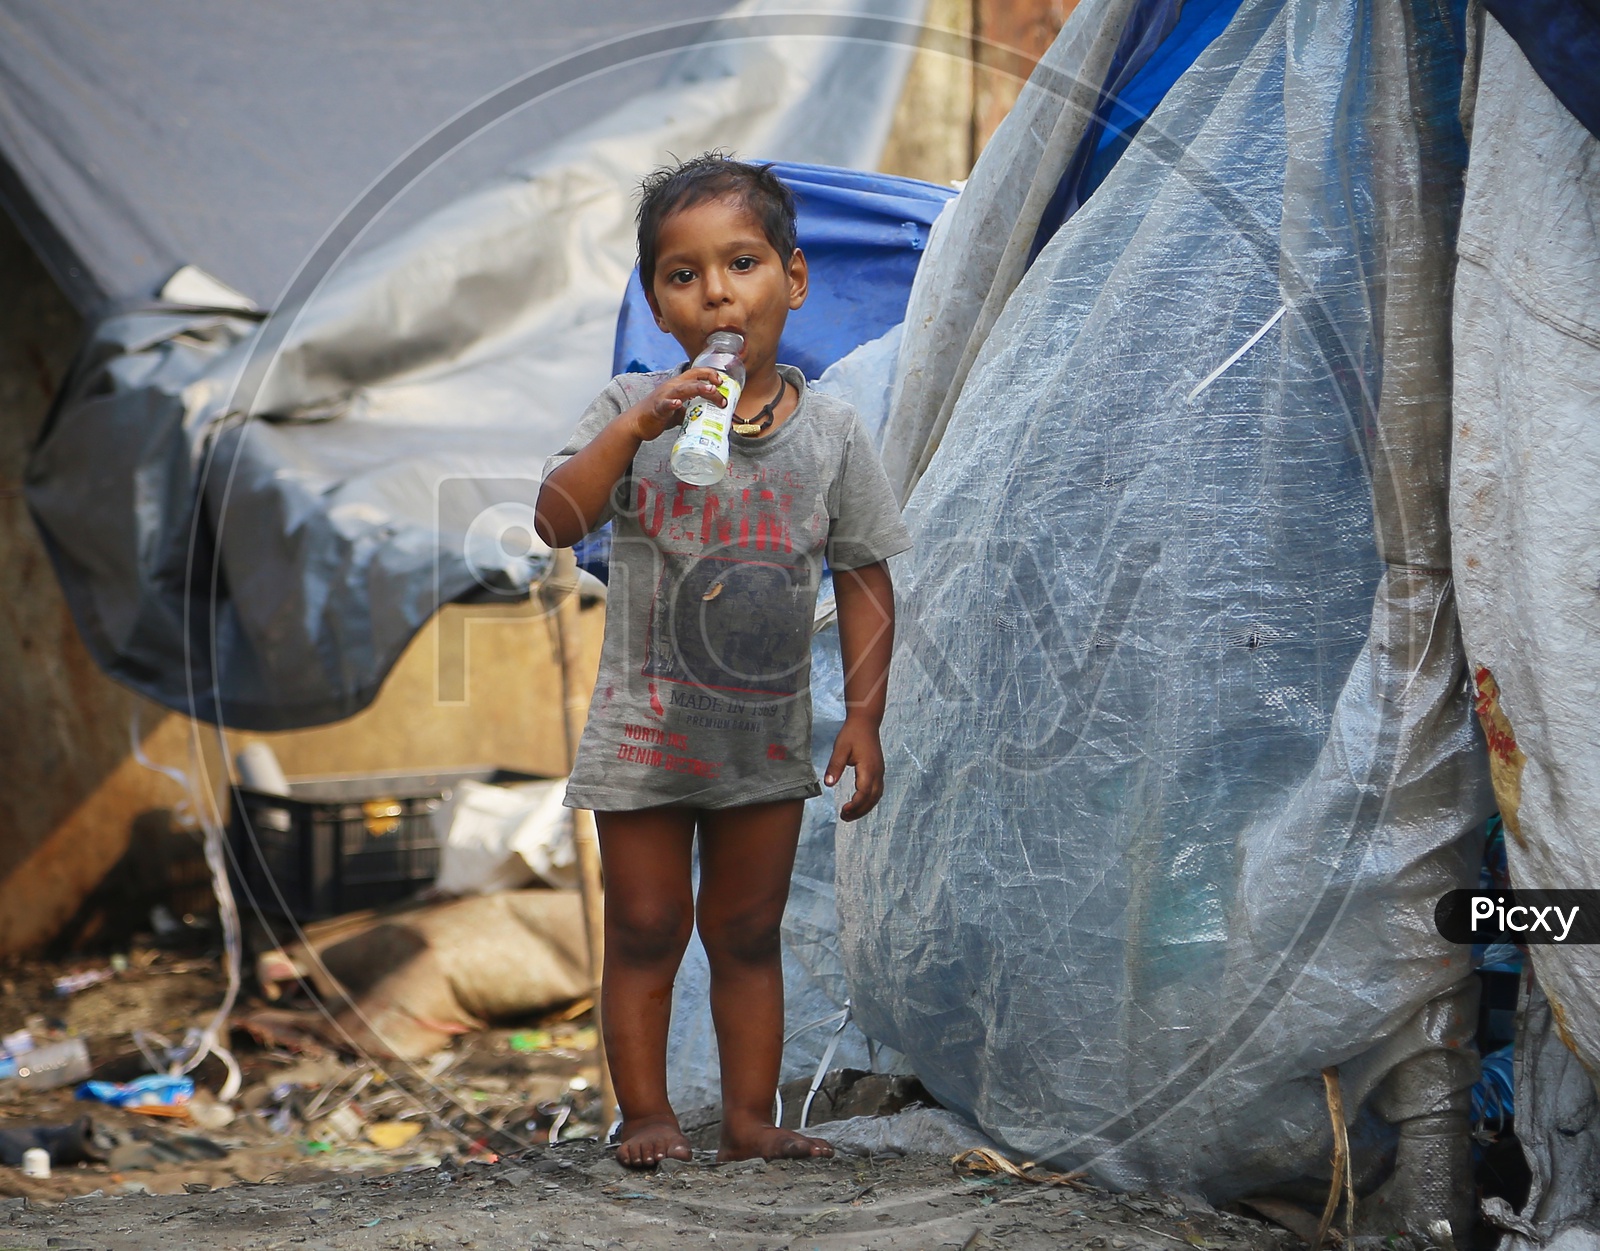 Kids  Or Children In Indian Slum Areas